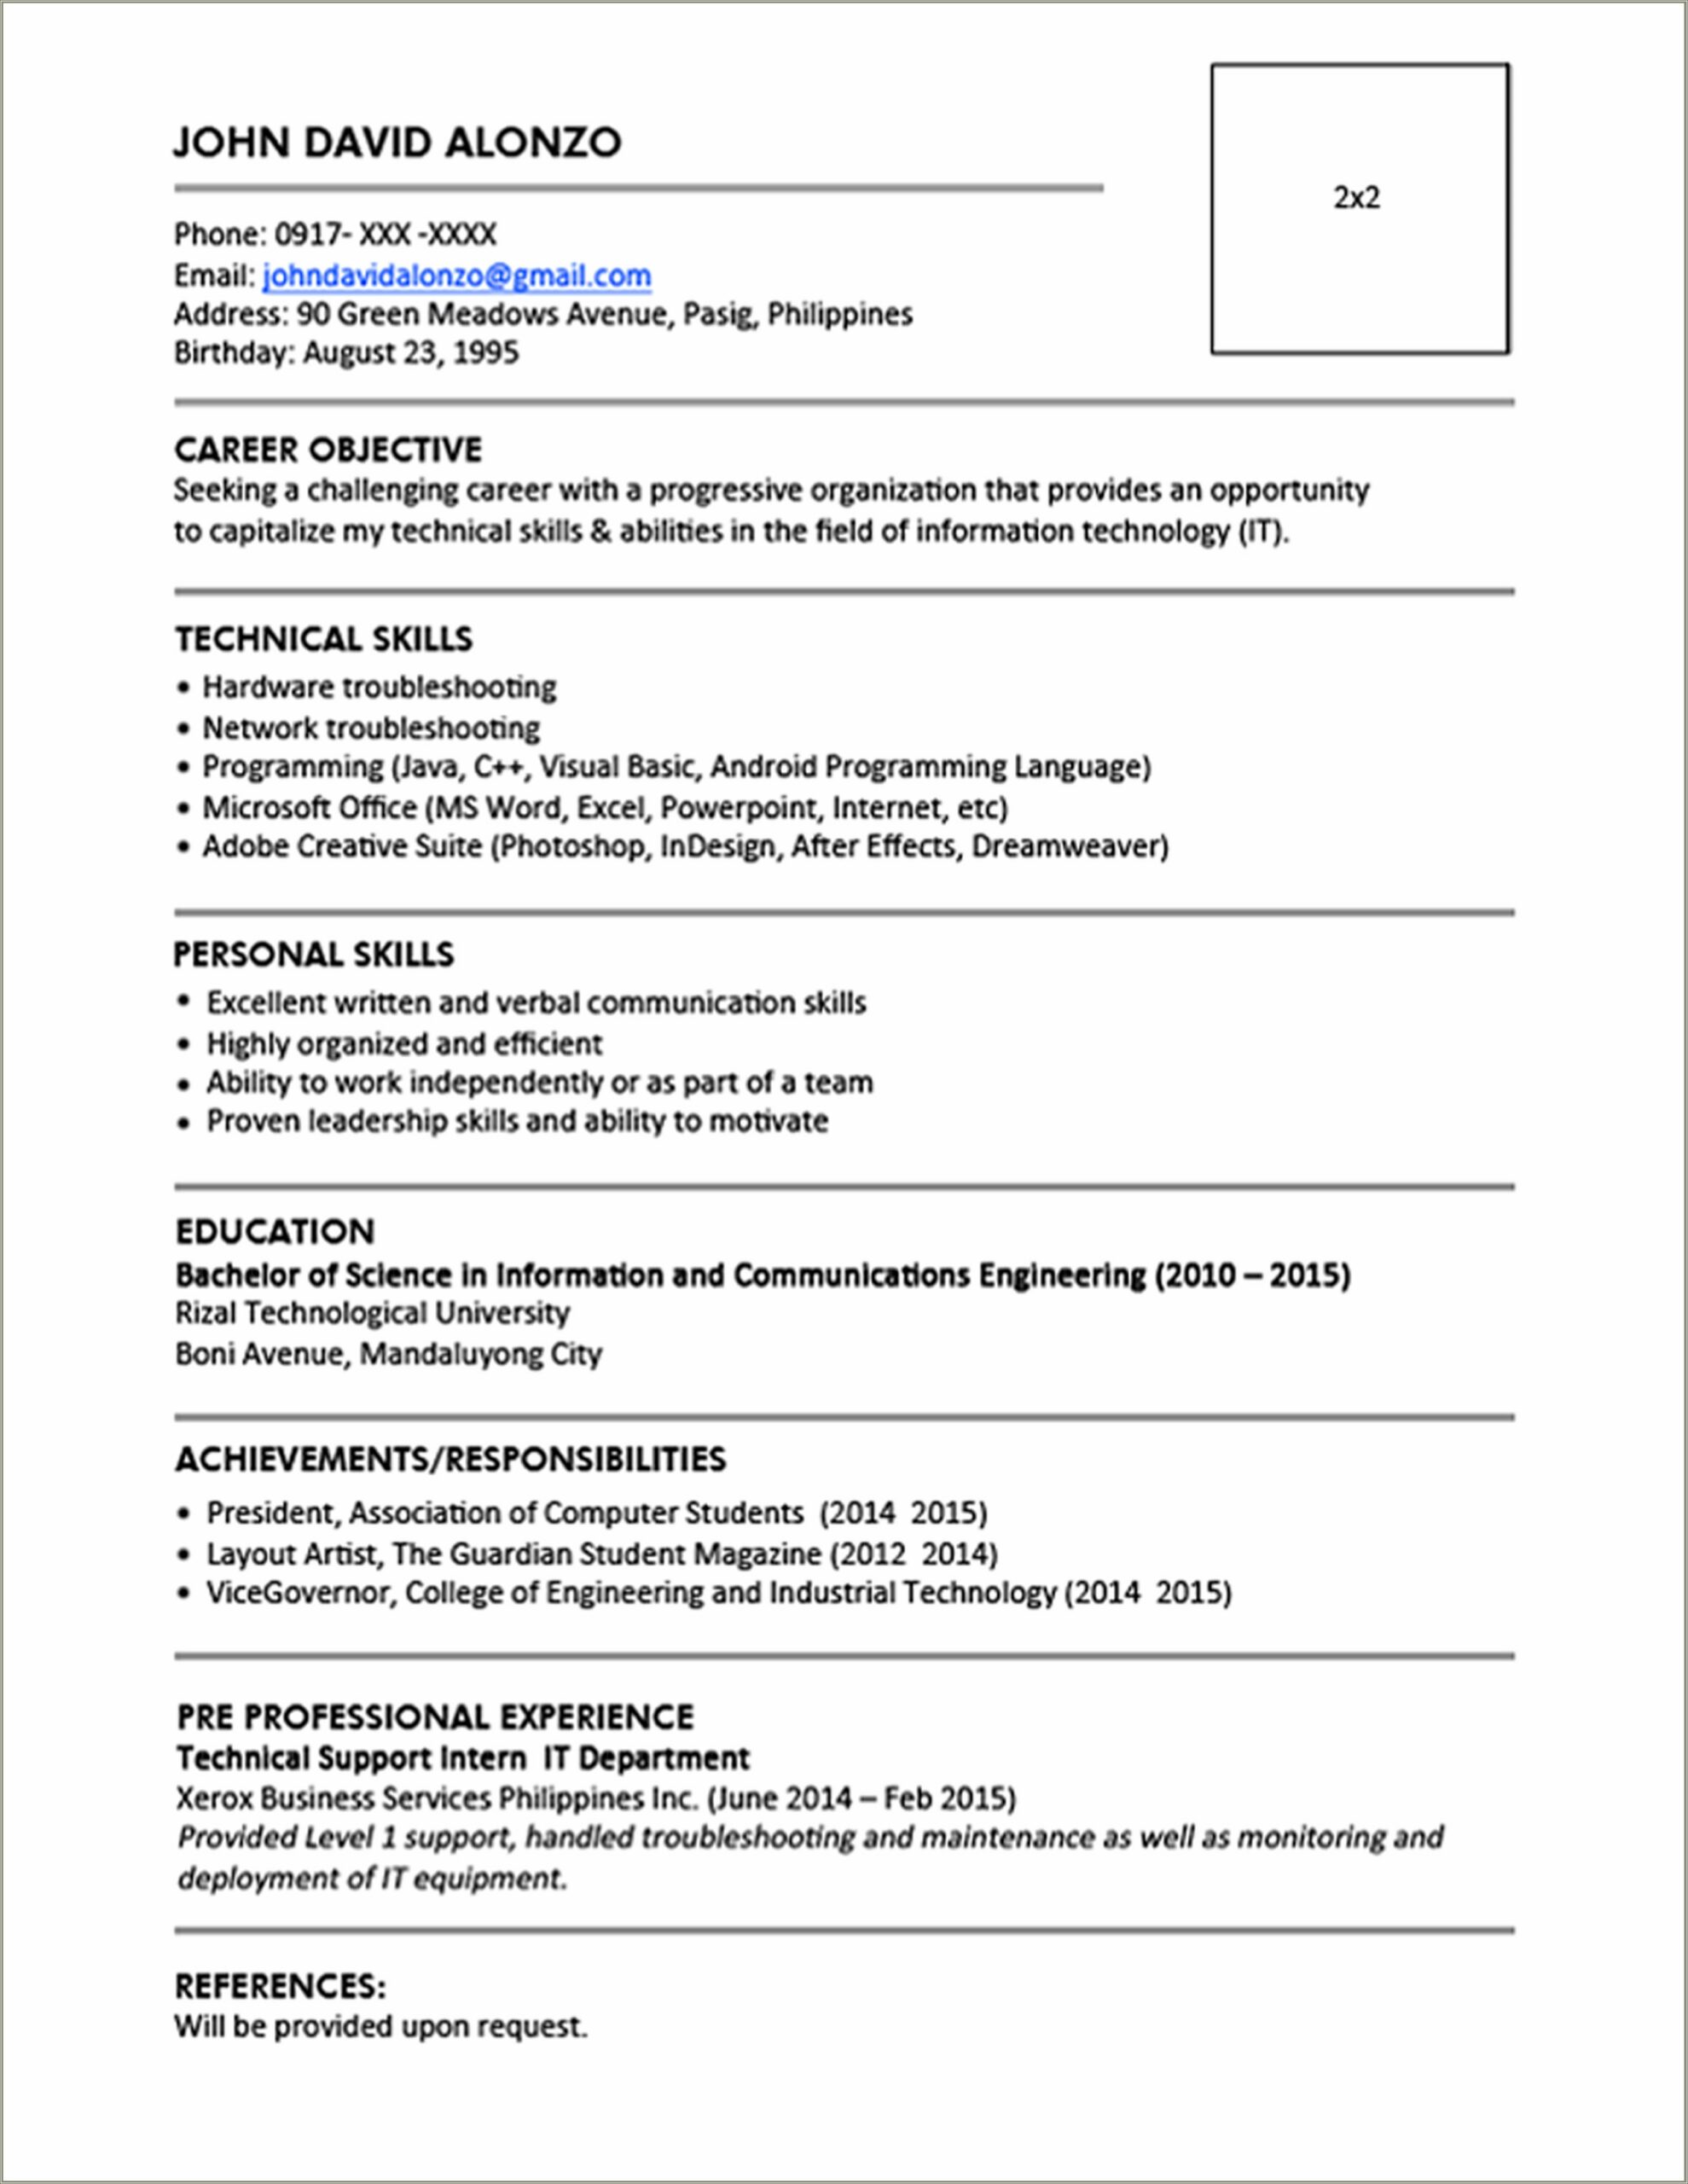 Sample Resume Format For Fresh Graduates Philippines